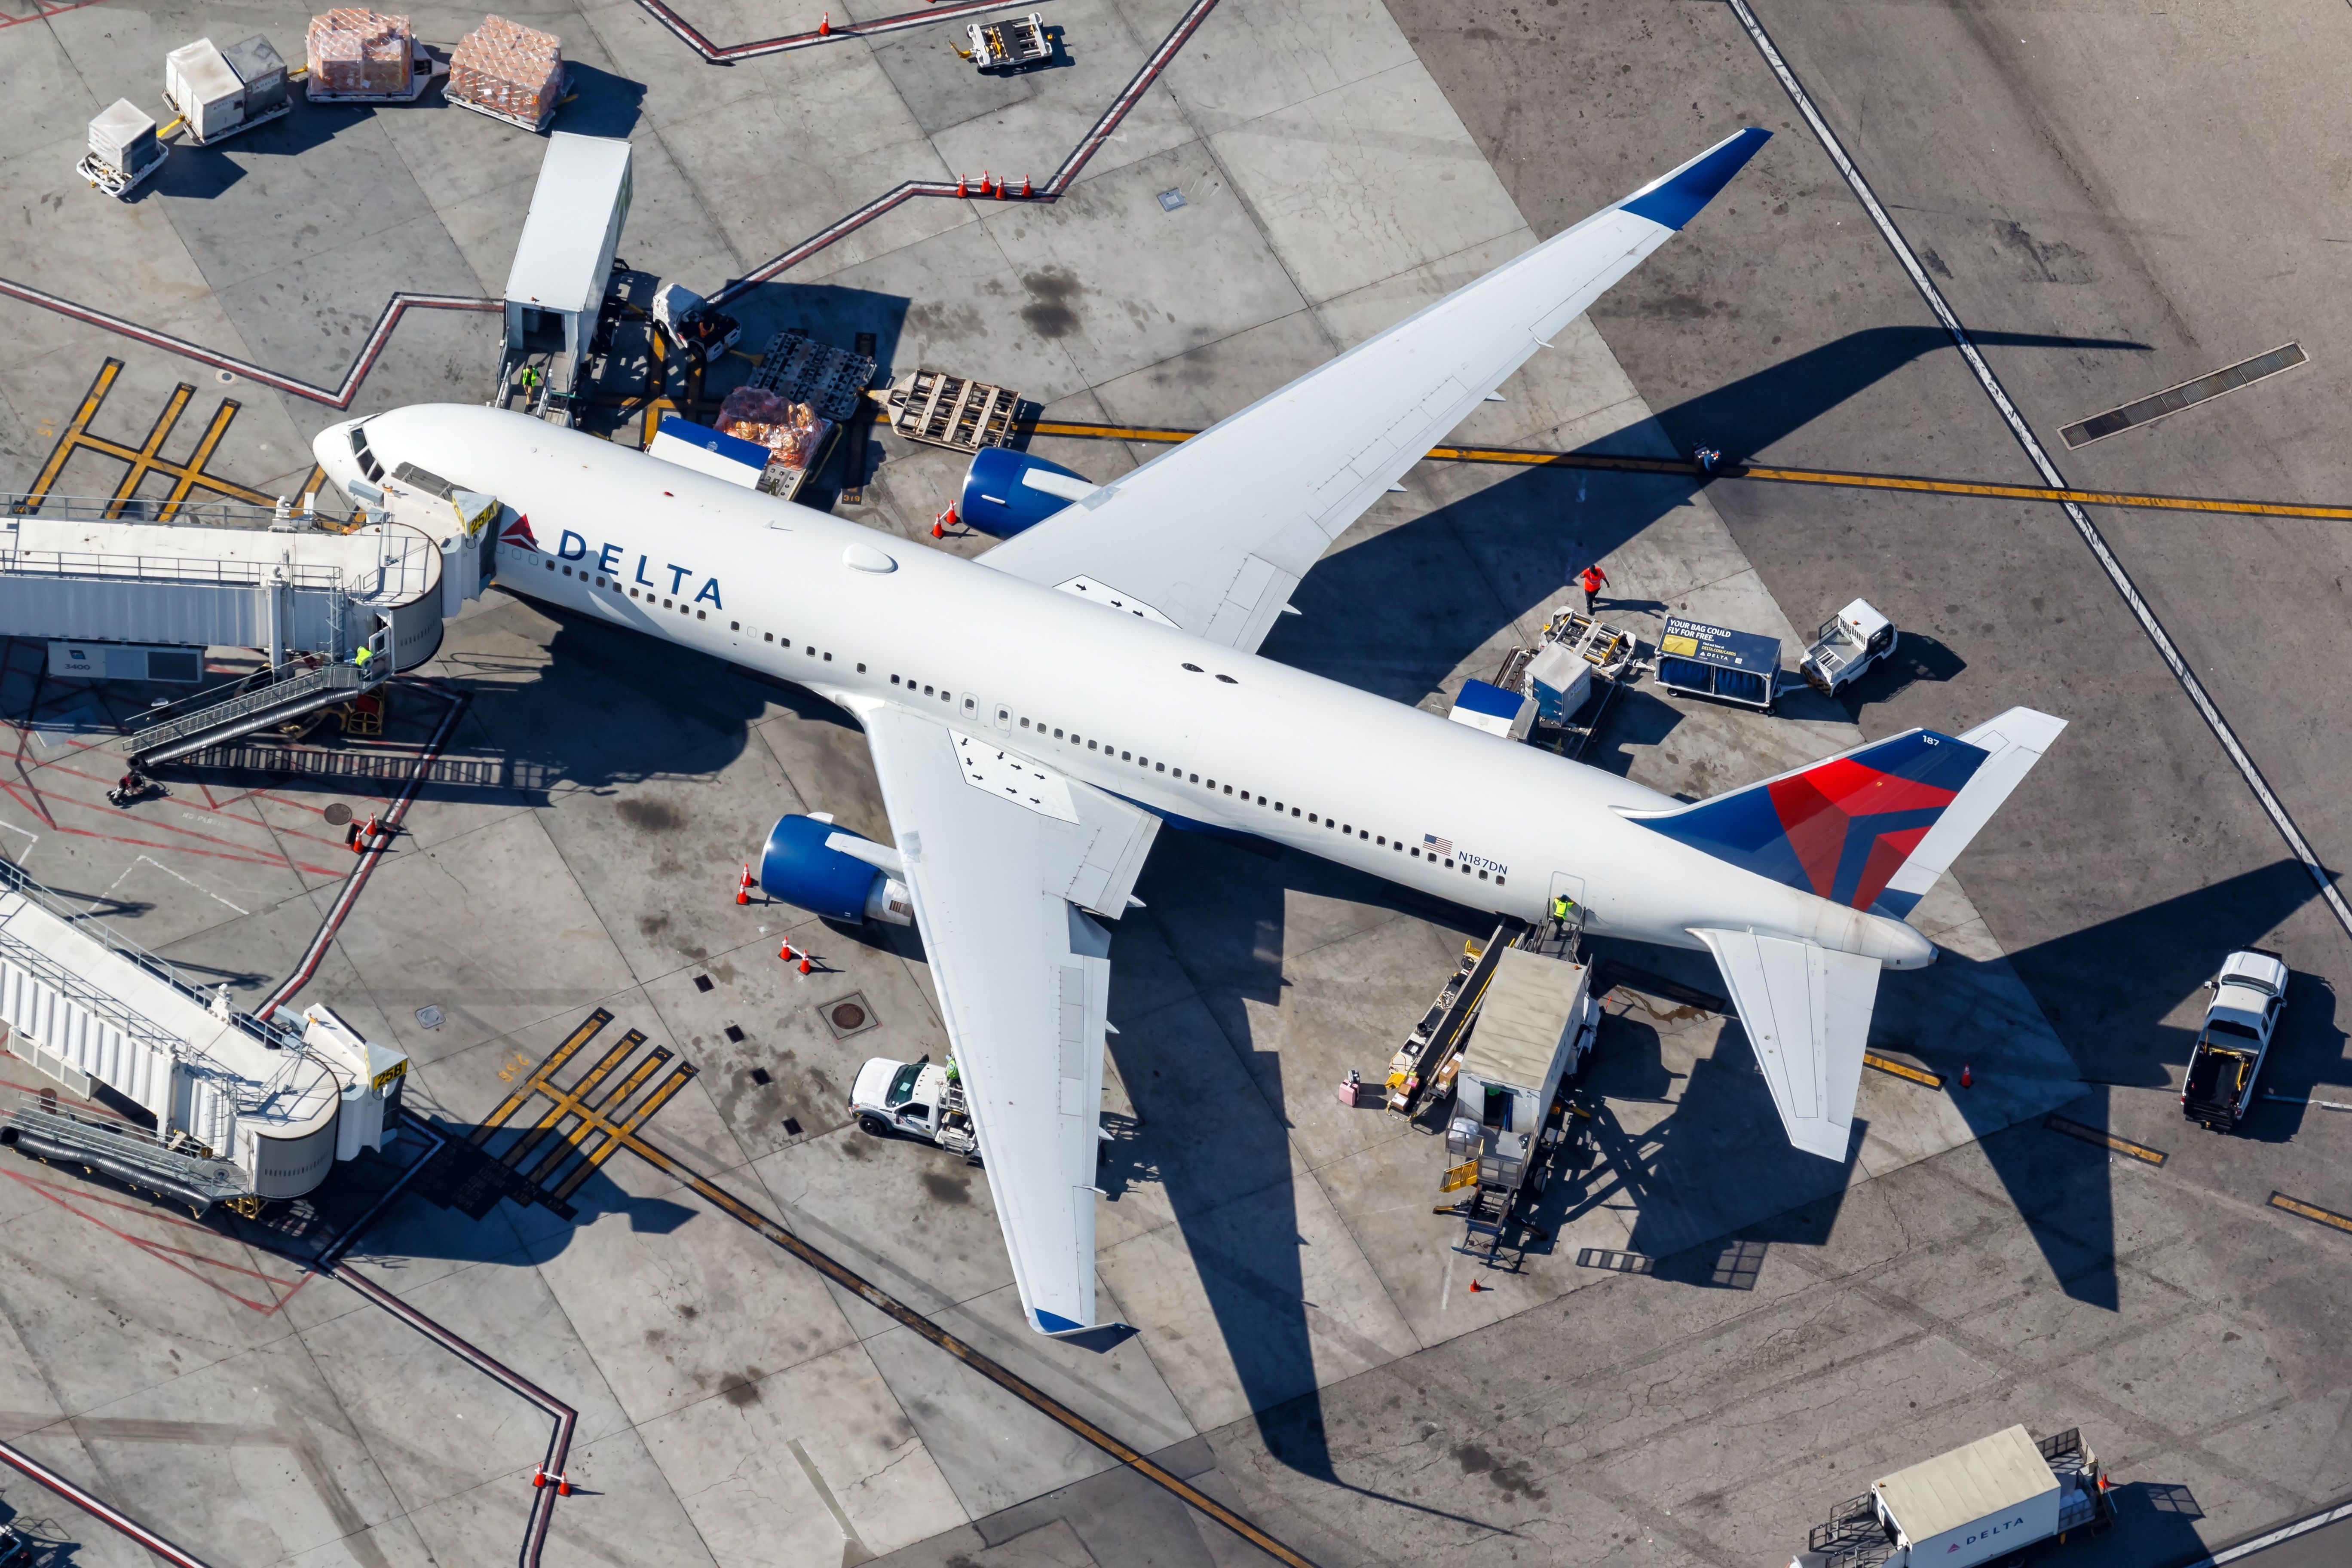 Delta 767-300ER on stand